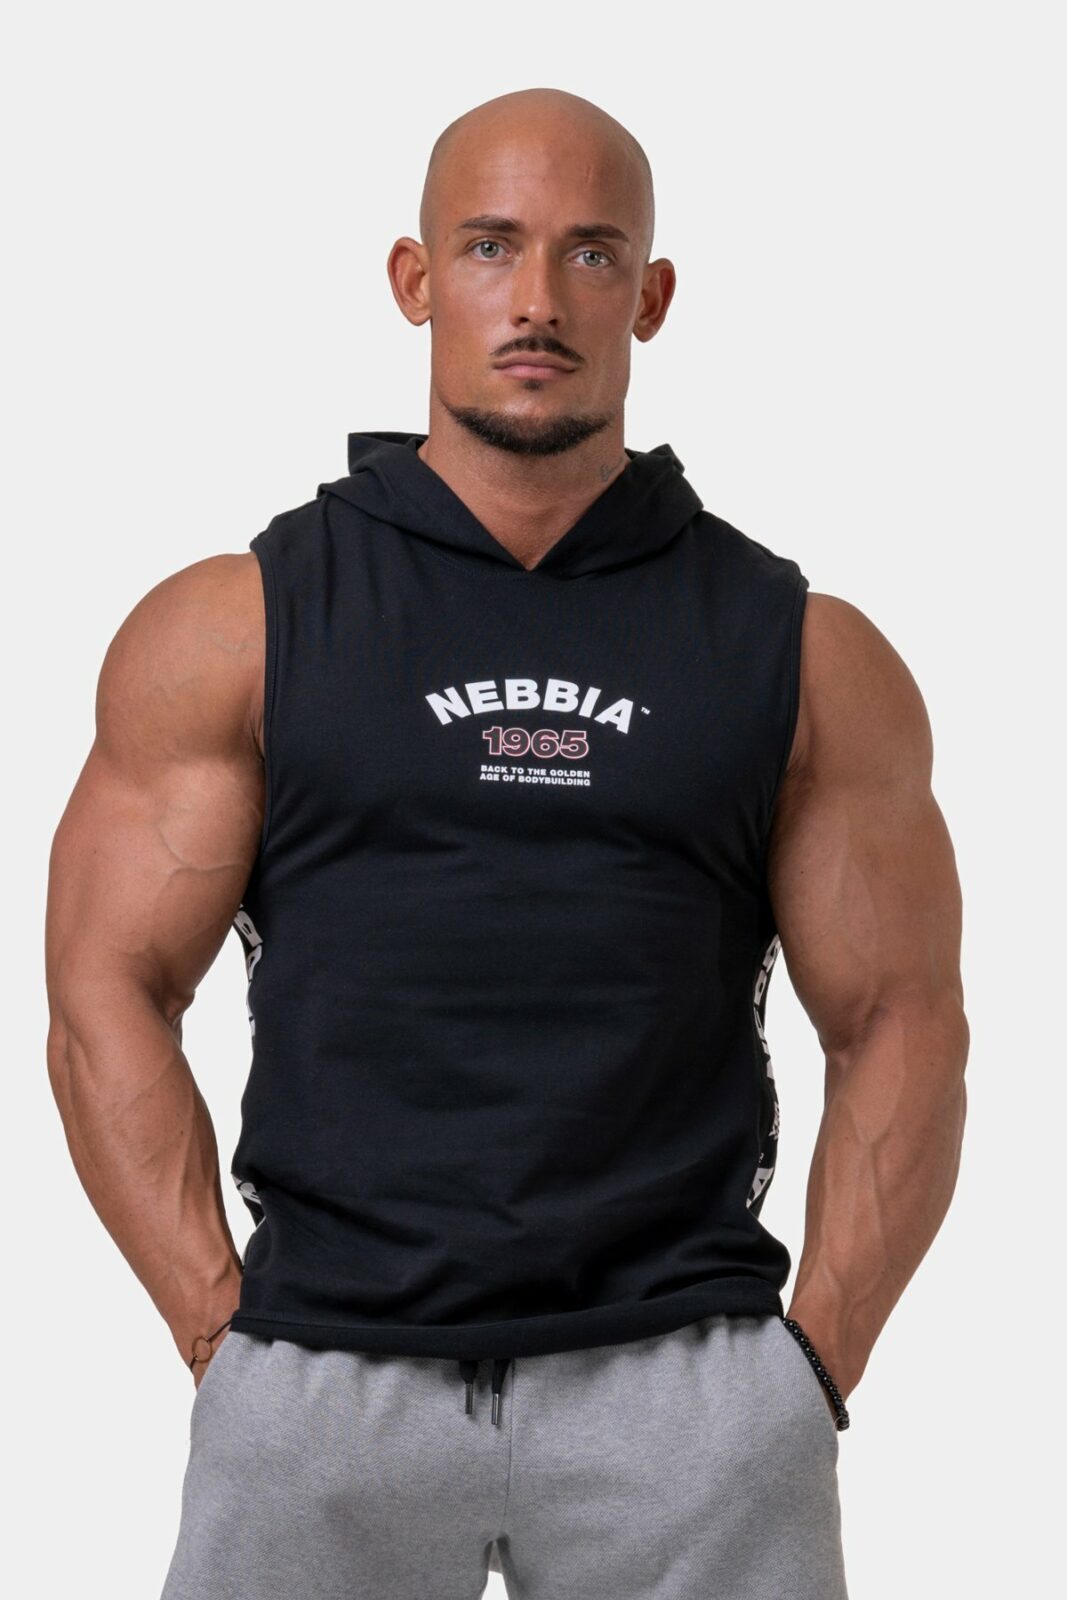 NEBBIA Legend-approved hooded vest